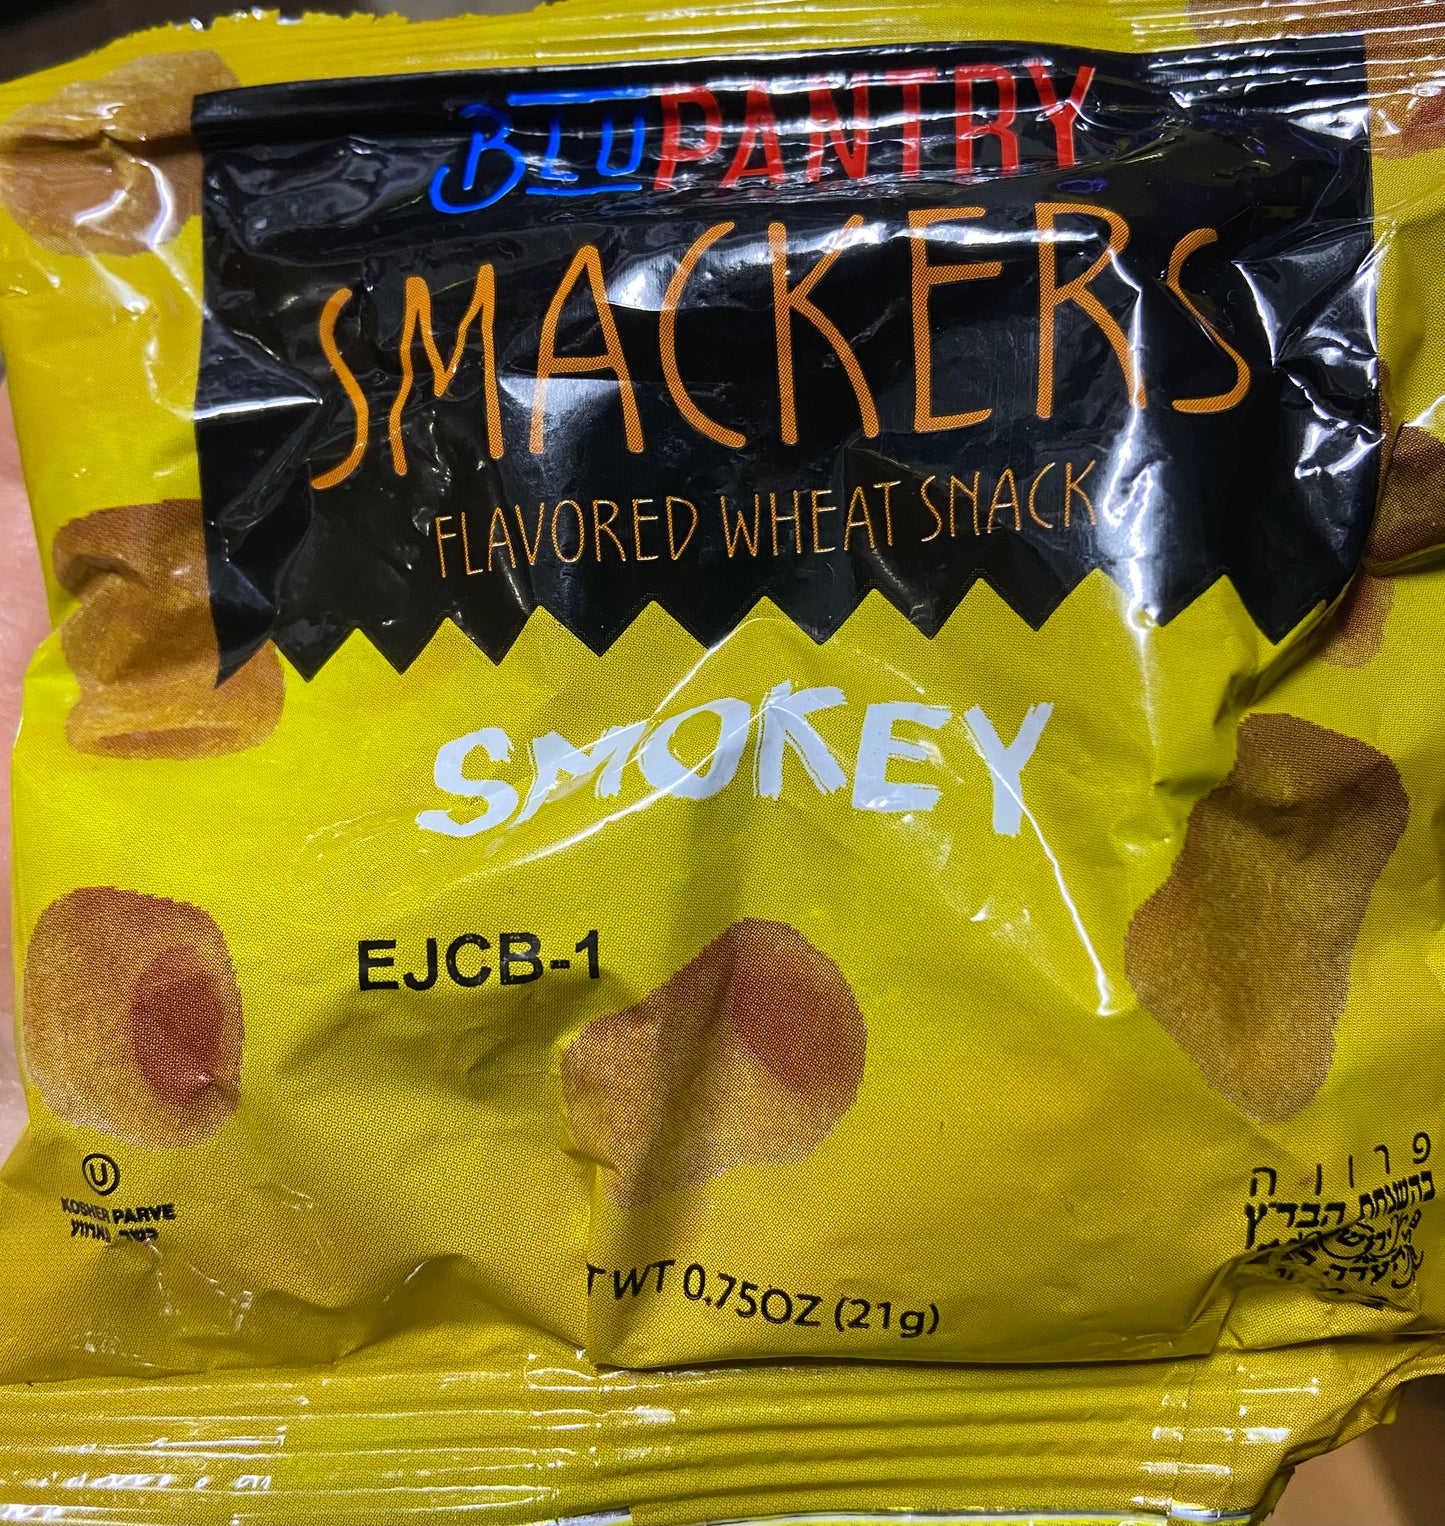 Smackers Wheat Snack Smokey